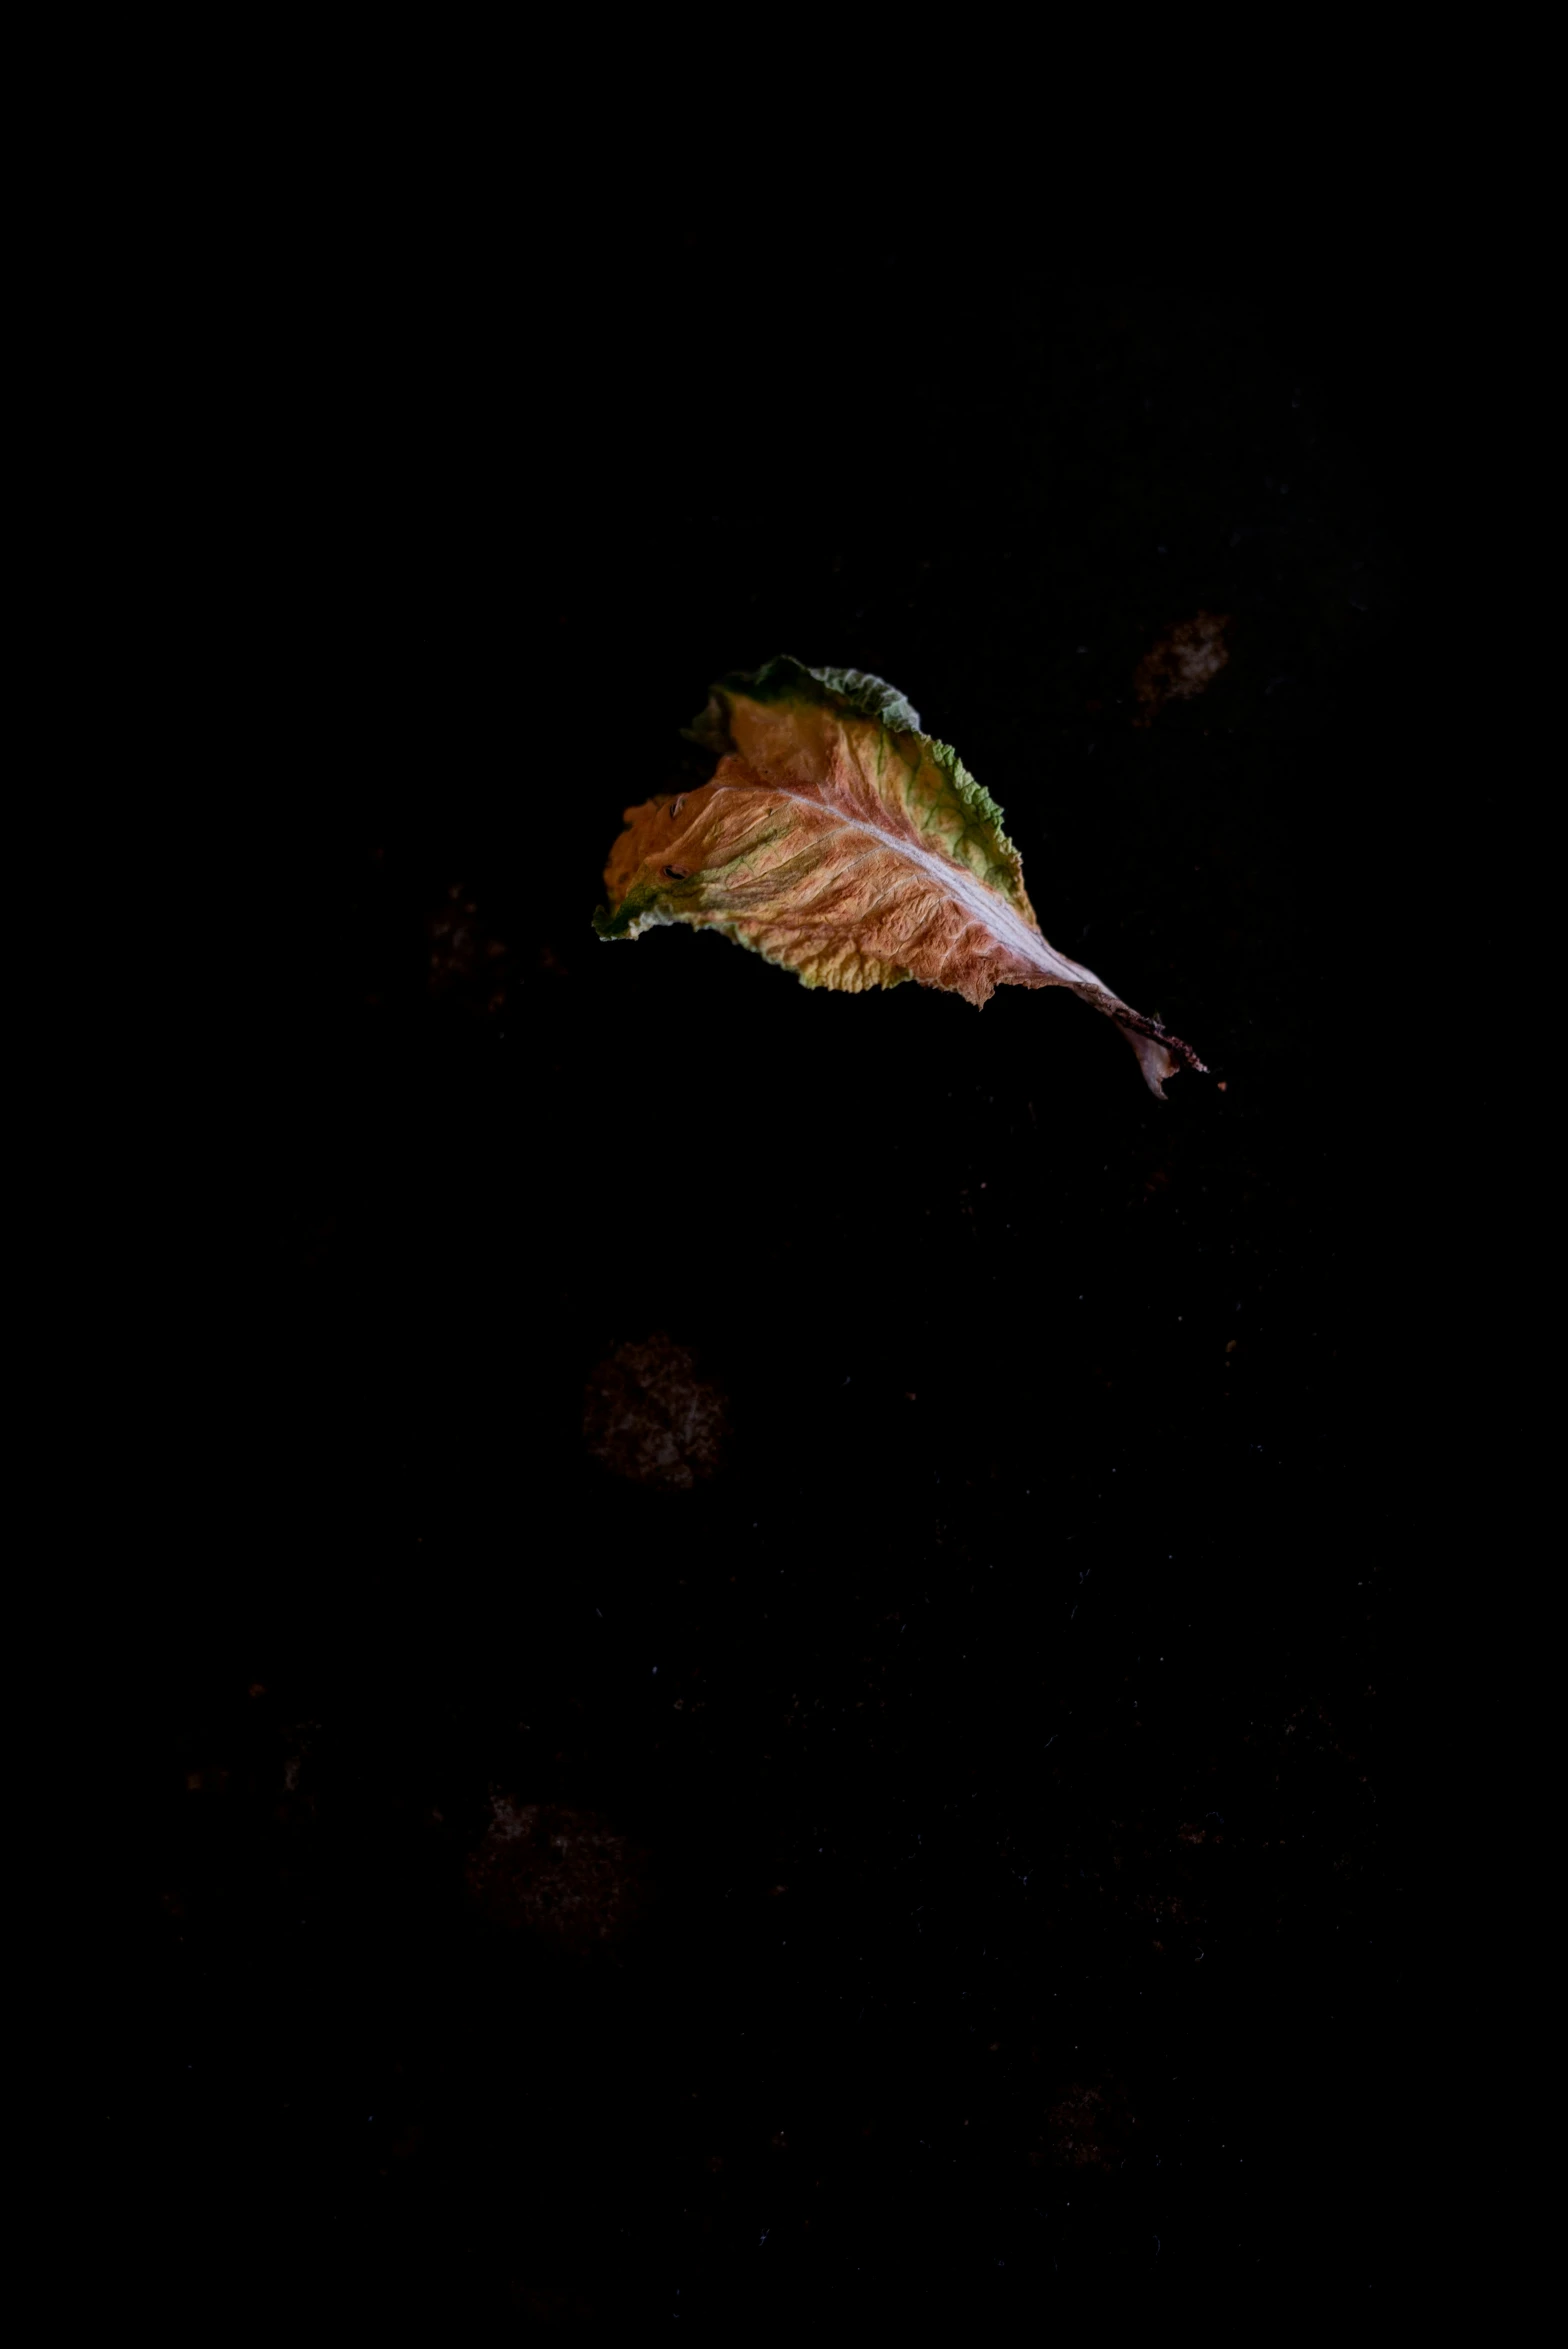 a leaf flying by in the dark